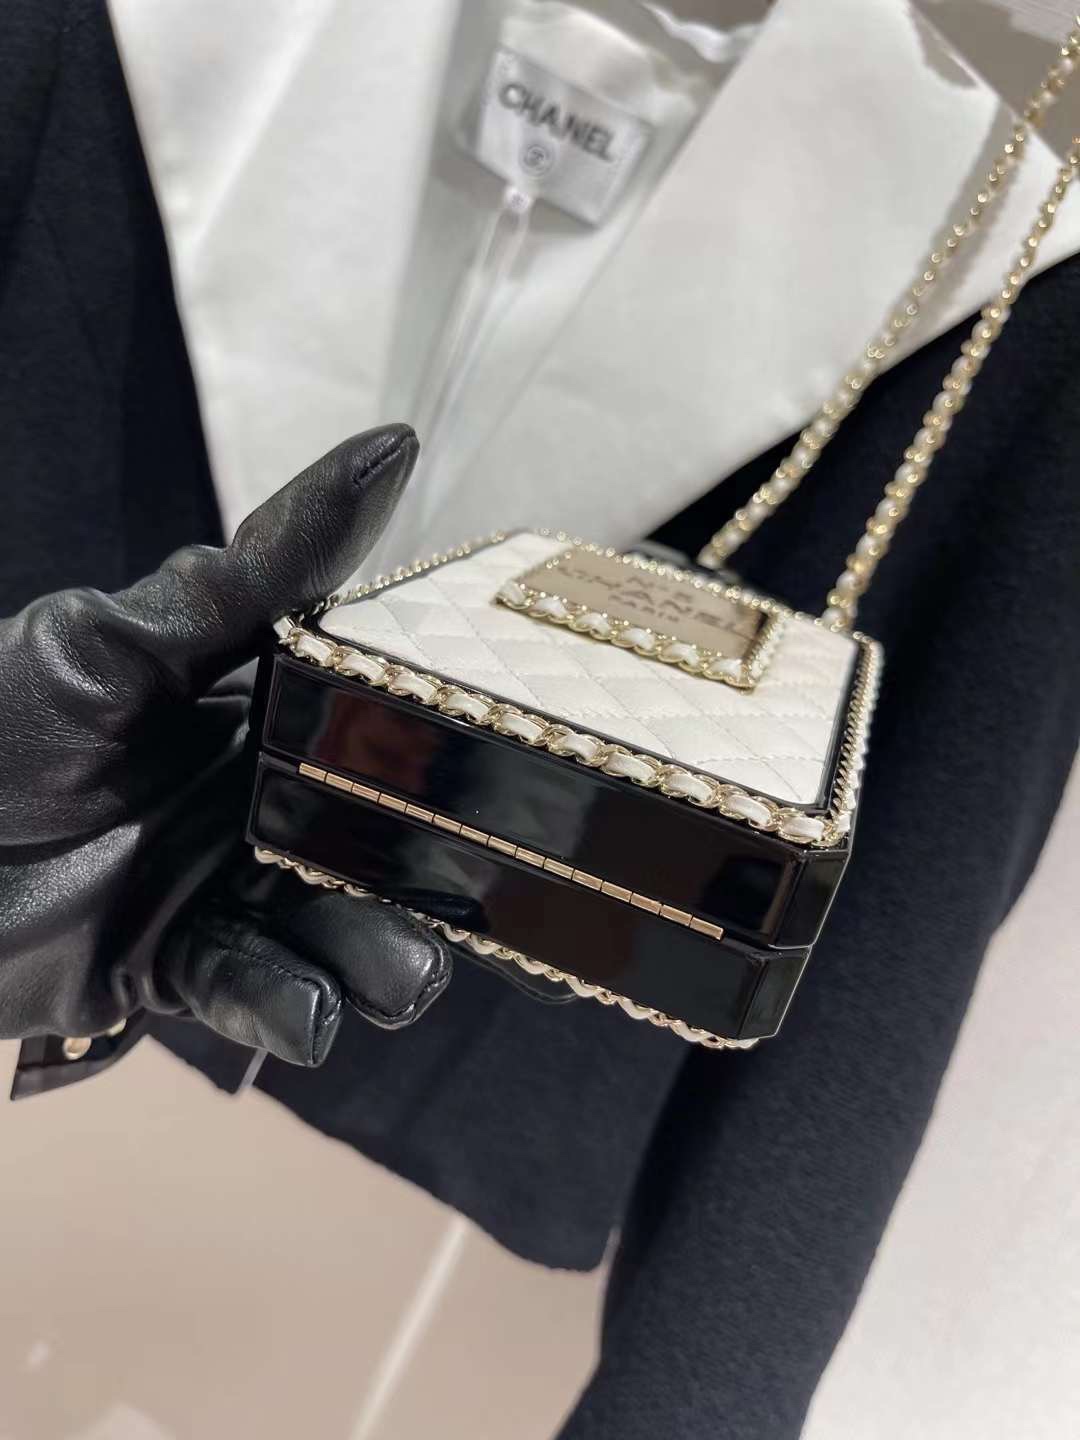 【P2180】Chanel包包价格 香奈儿白色羊皮香水瓶化妆包链条斜挎包